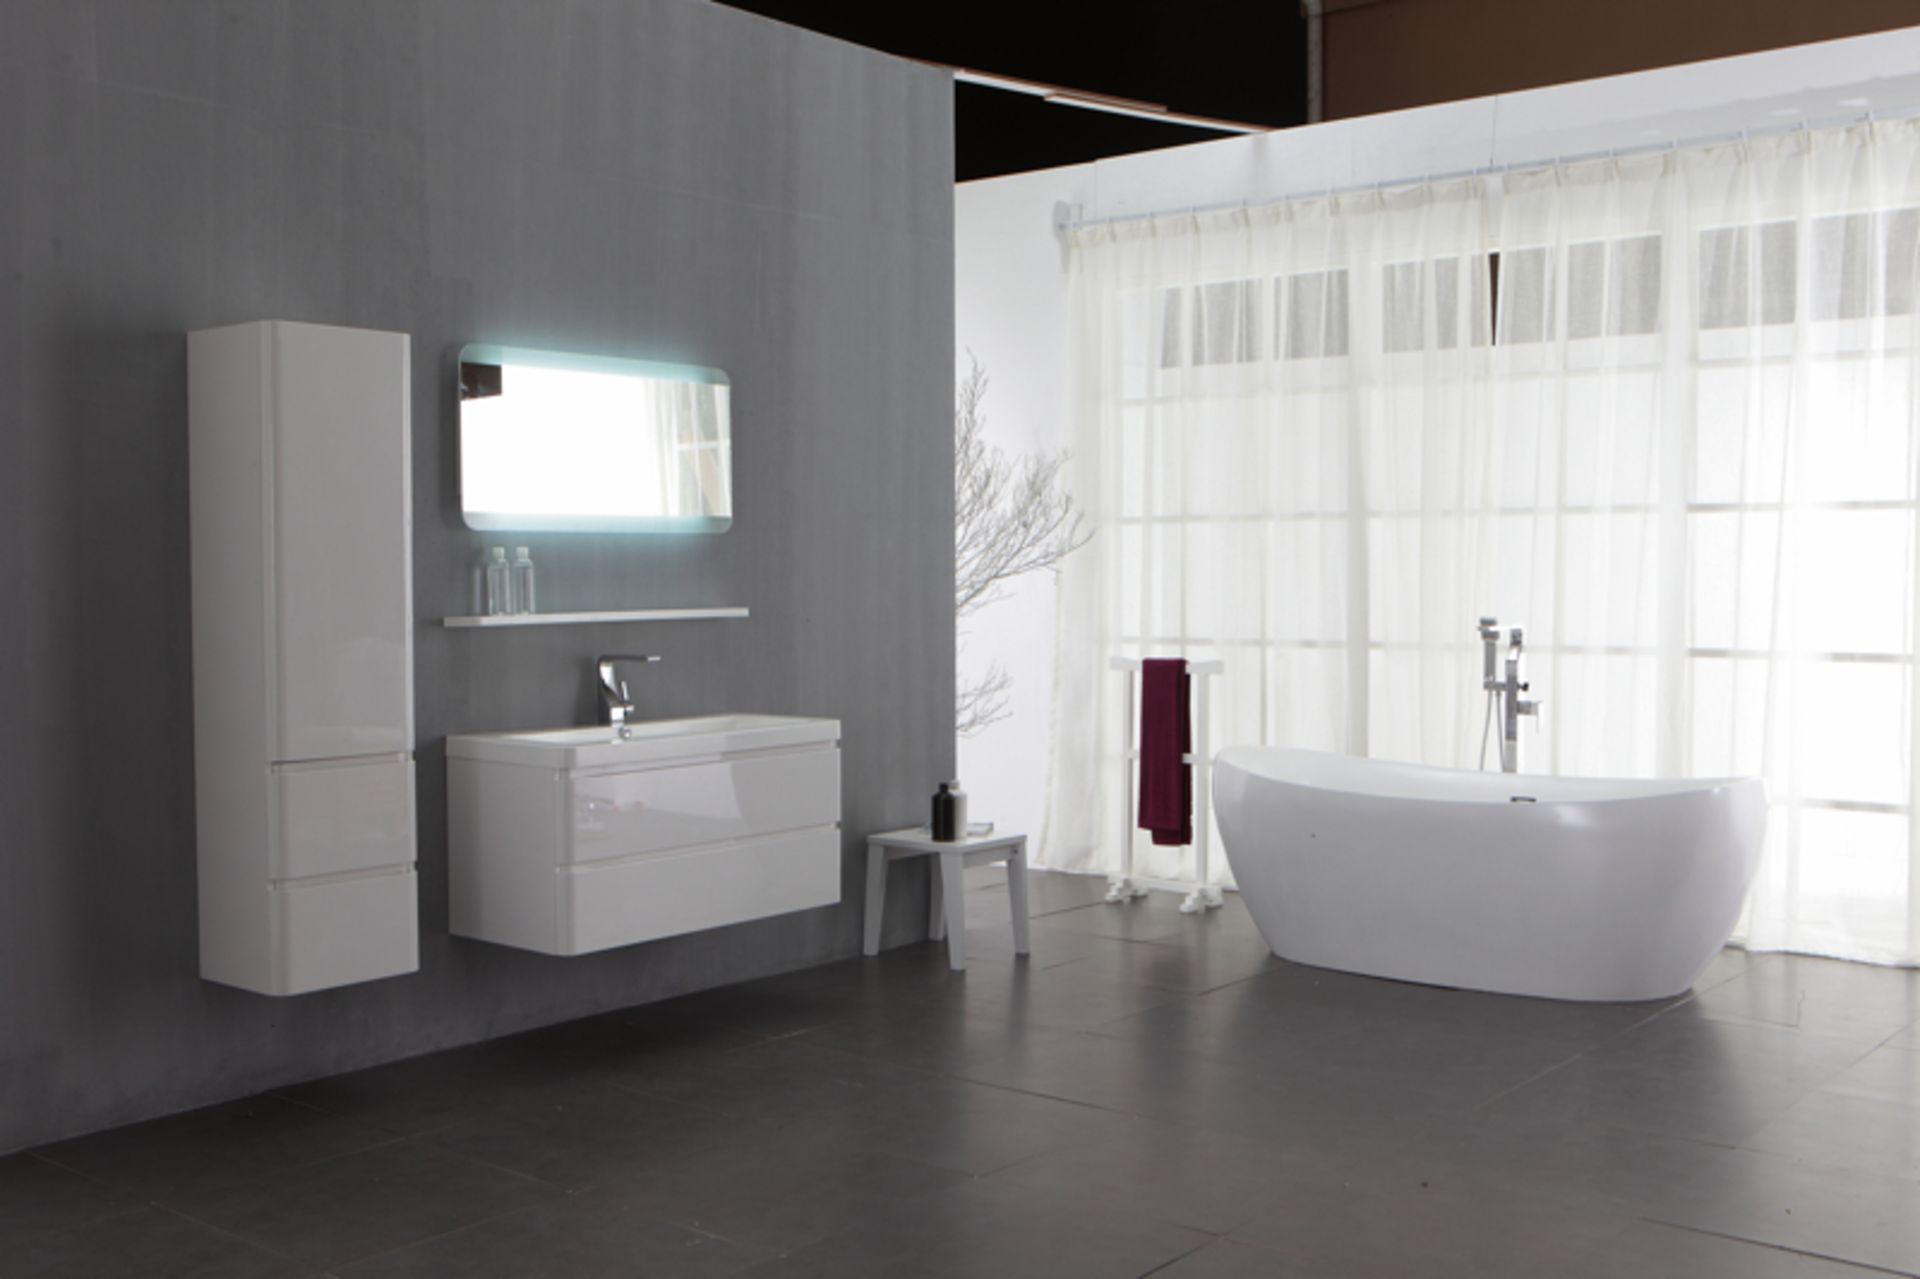 1 x MarbleTECH Serenity Bath - Image 4 of 5